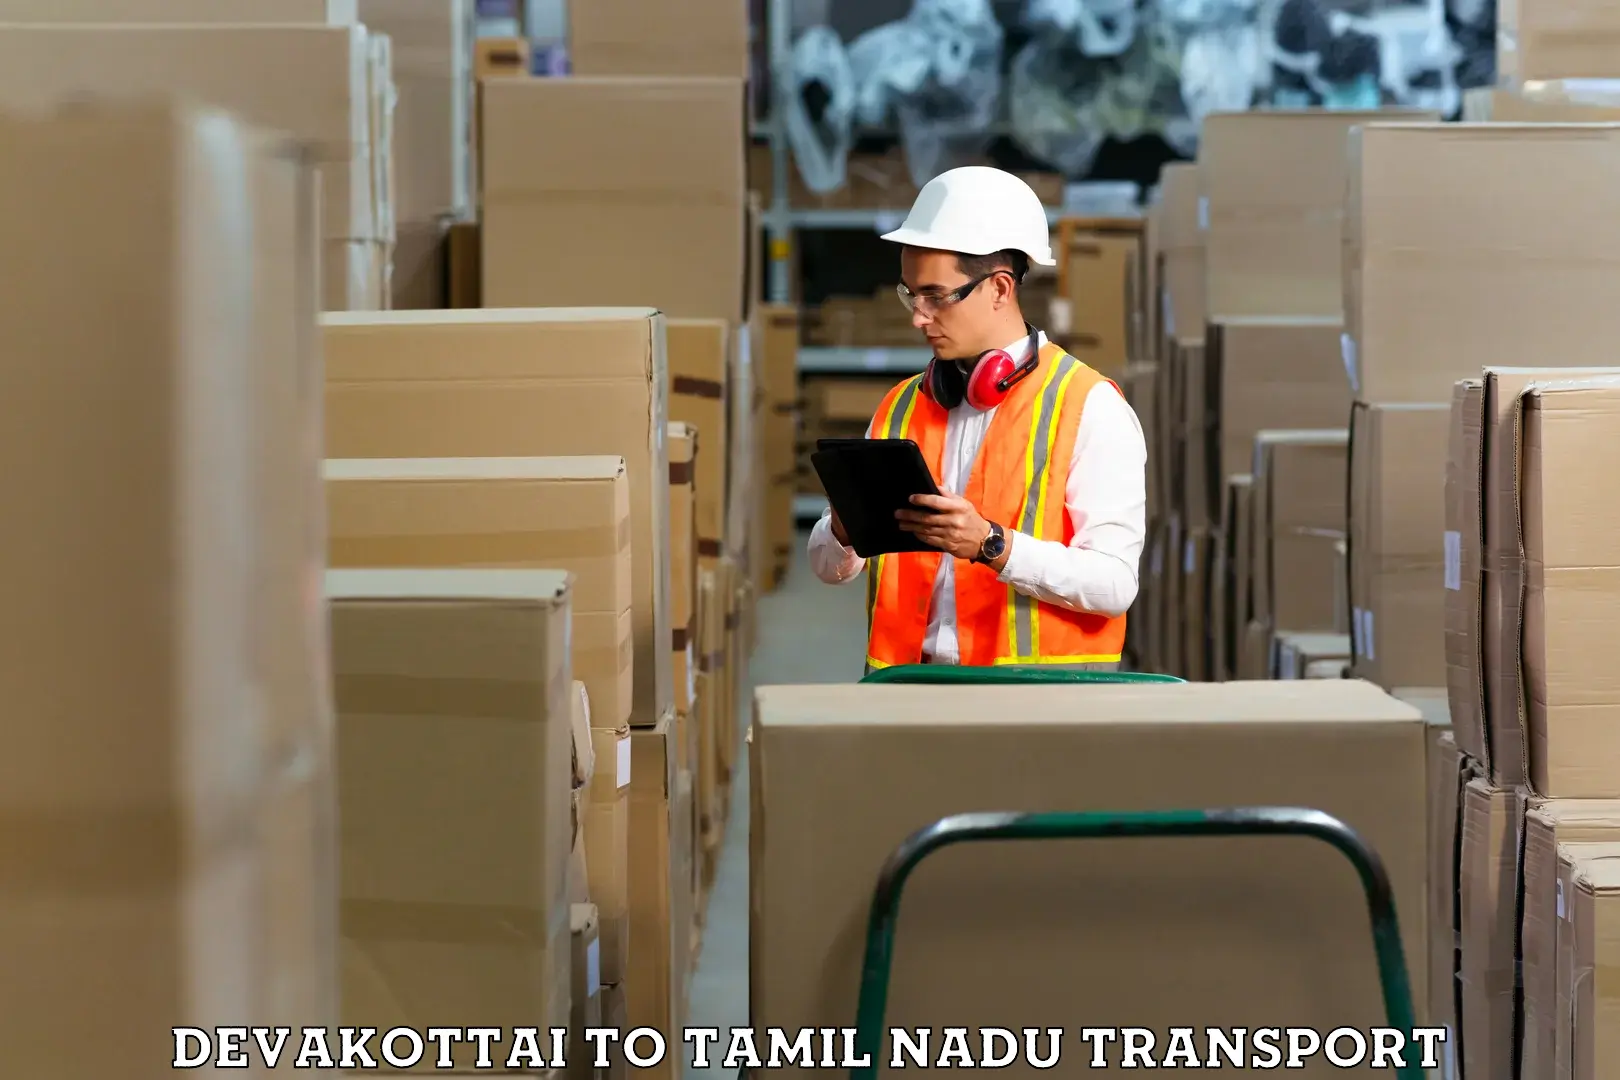 Delivery service Devakottai to Kodaikanal